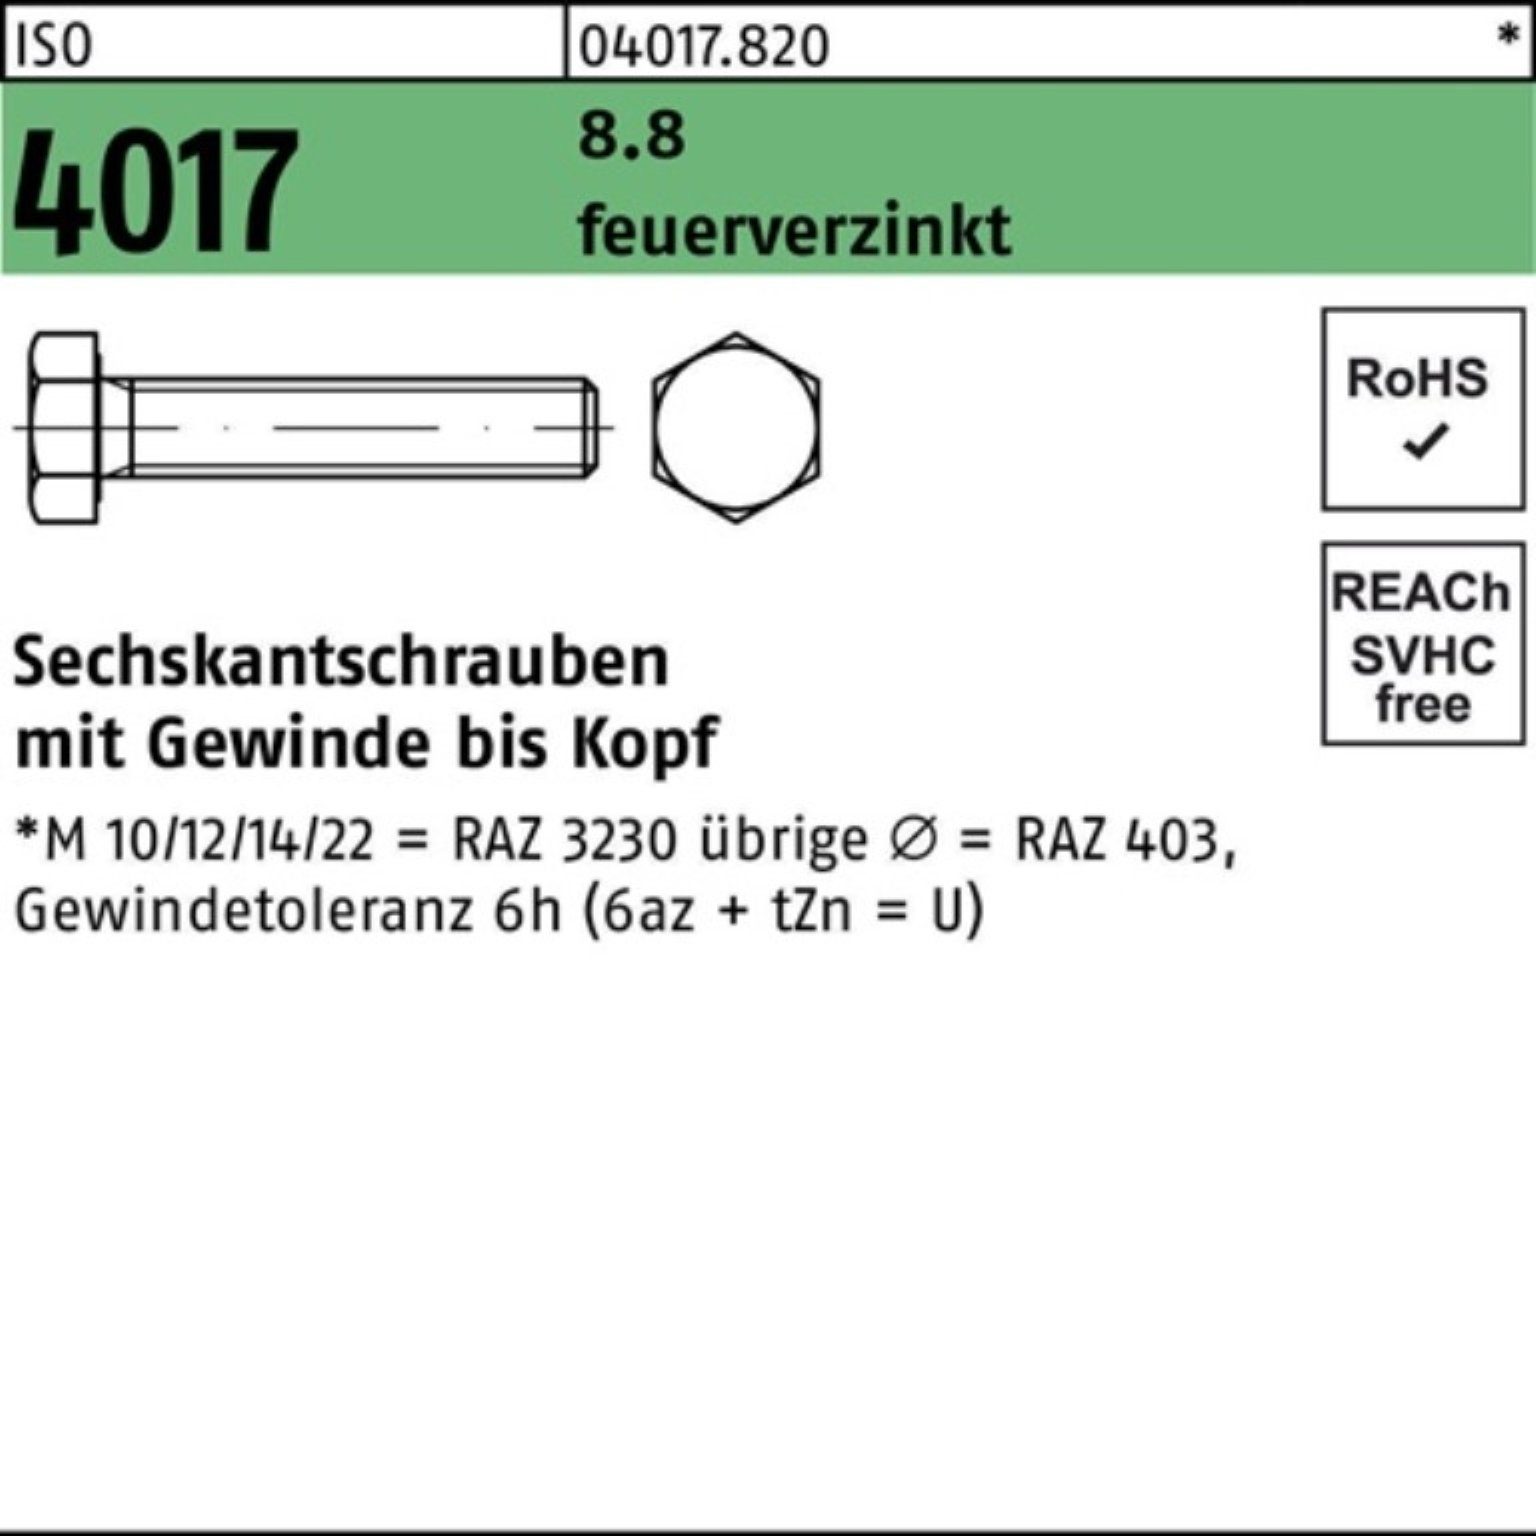 Bufab Sechskantschraube 100er Pack Sechskantschraube ISO 4017 VG M30x 80 8.8 feuerverz. 1 Stü